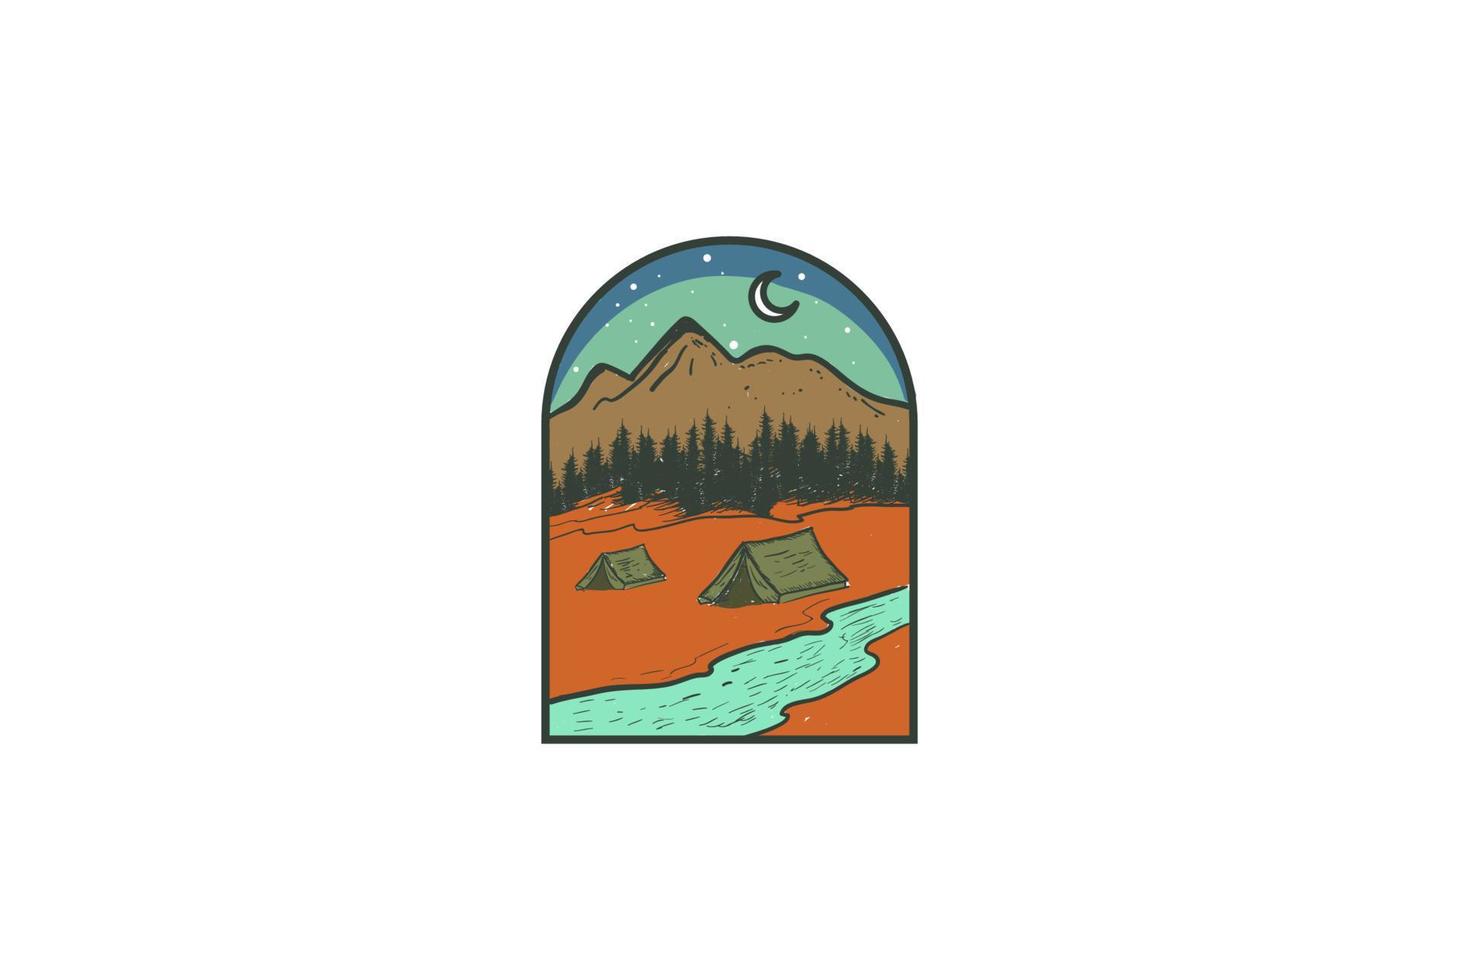 noche montaña pino siempre verde abeto conífera abeto alerce cipreses bosque con carpa campamento para aventura insignia emblema diseño de logotipo vector